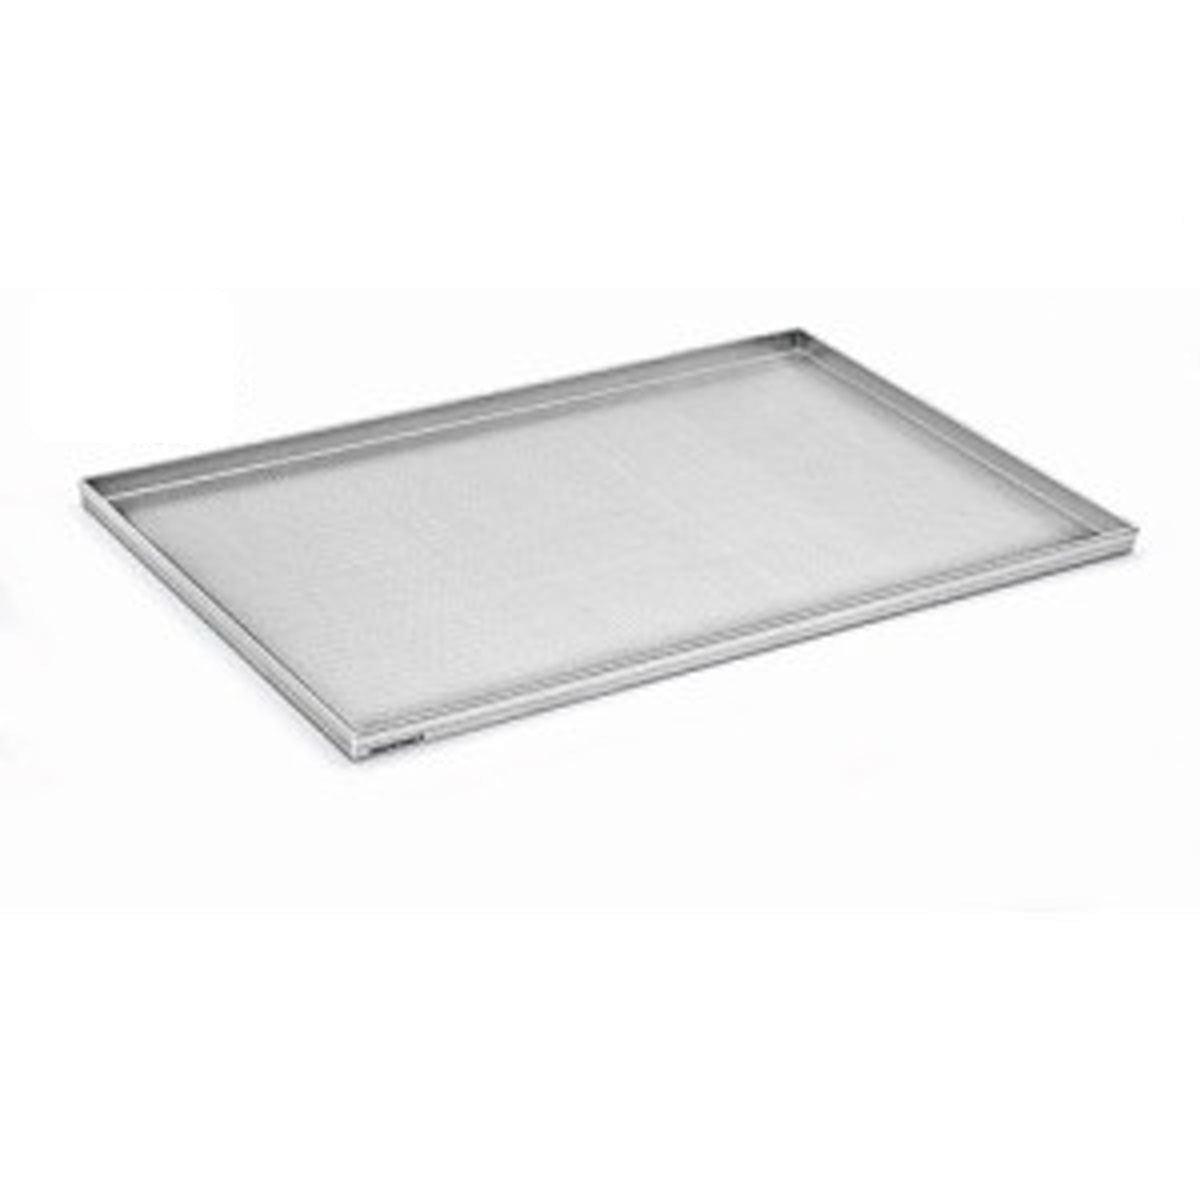 Flat perforated aluminum tray